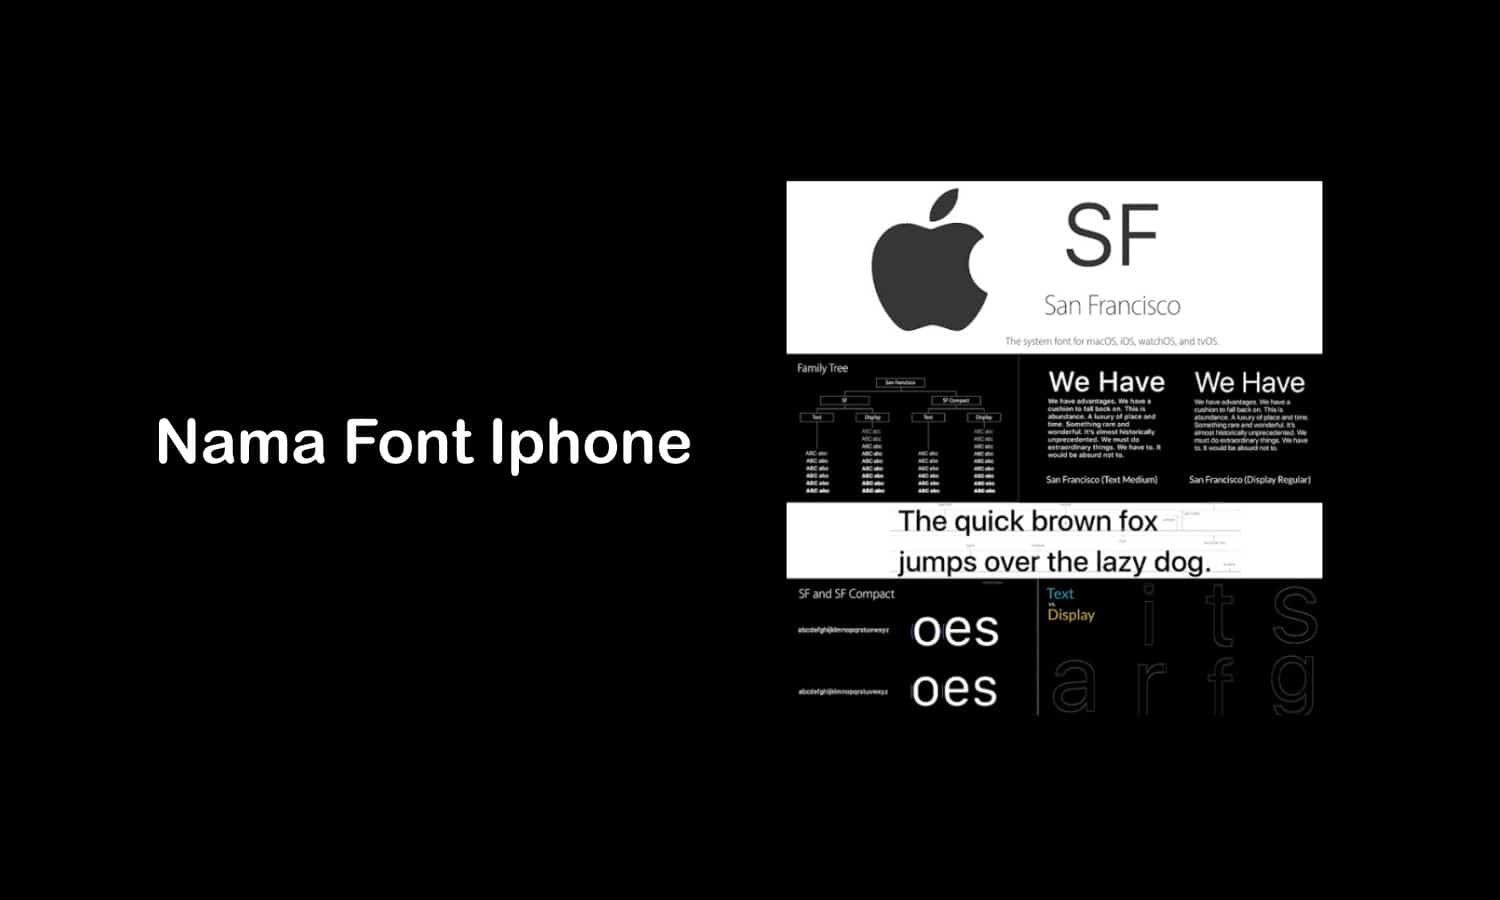 nama-font-iphone-download-free